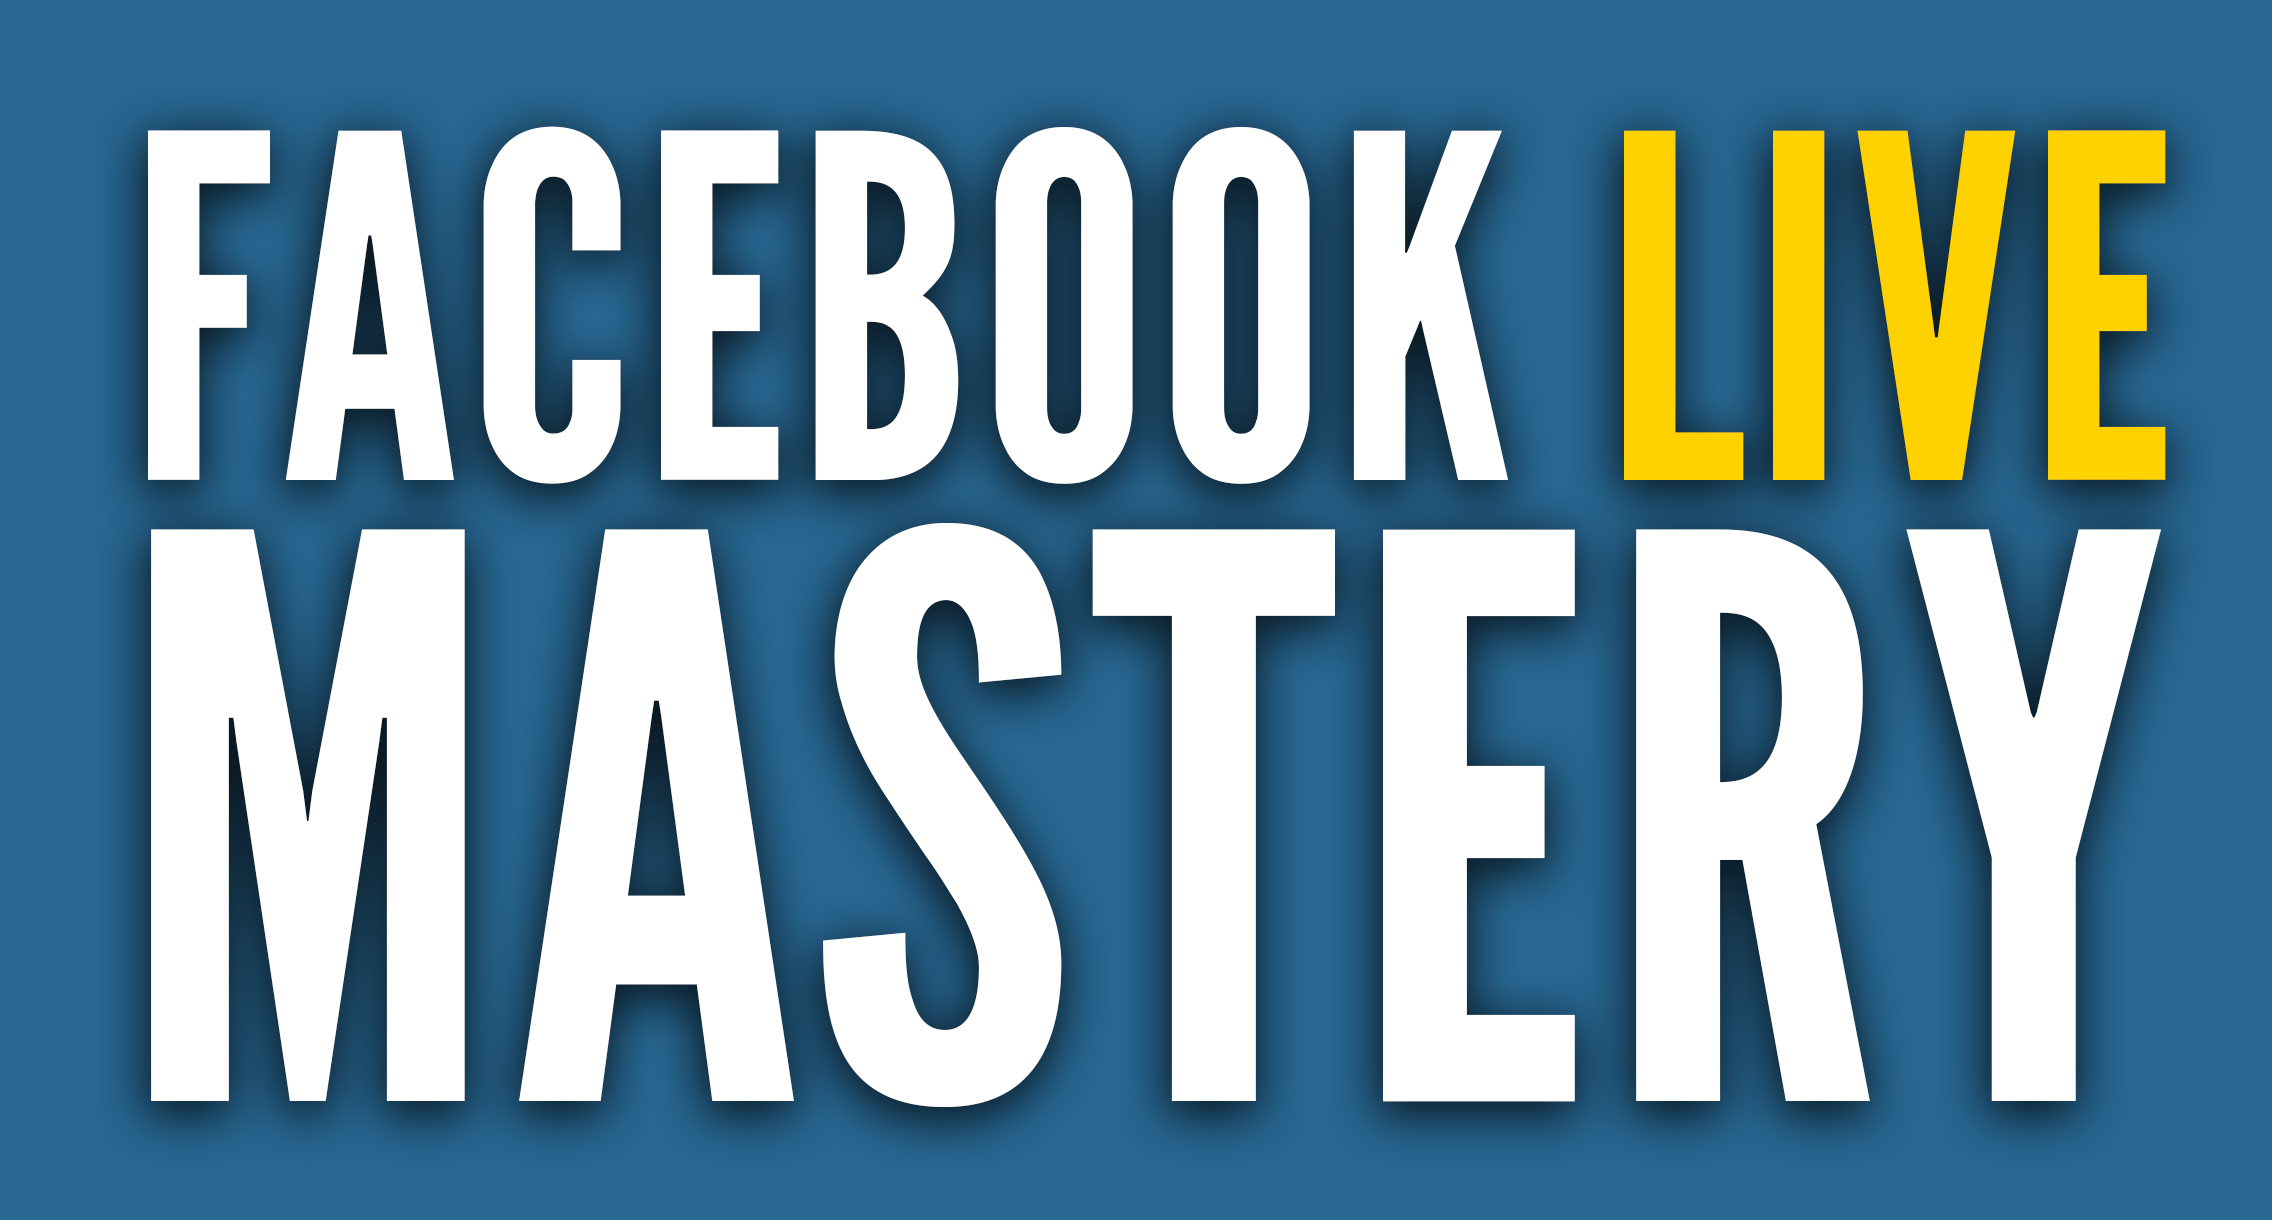 Facebook Live Mastery